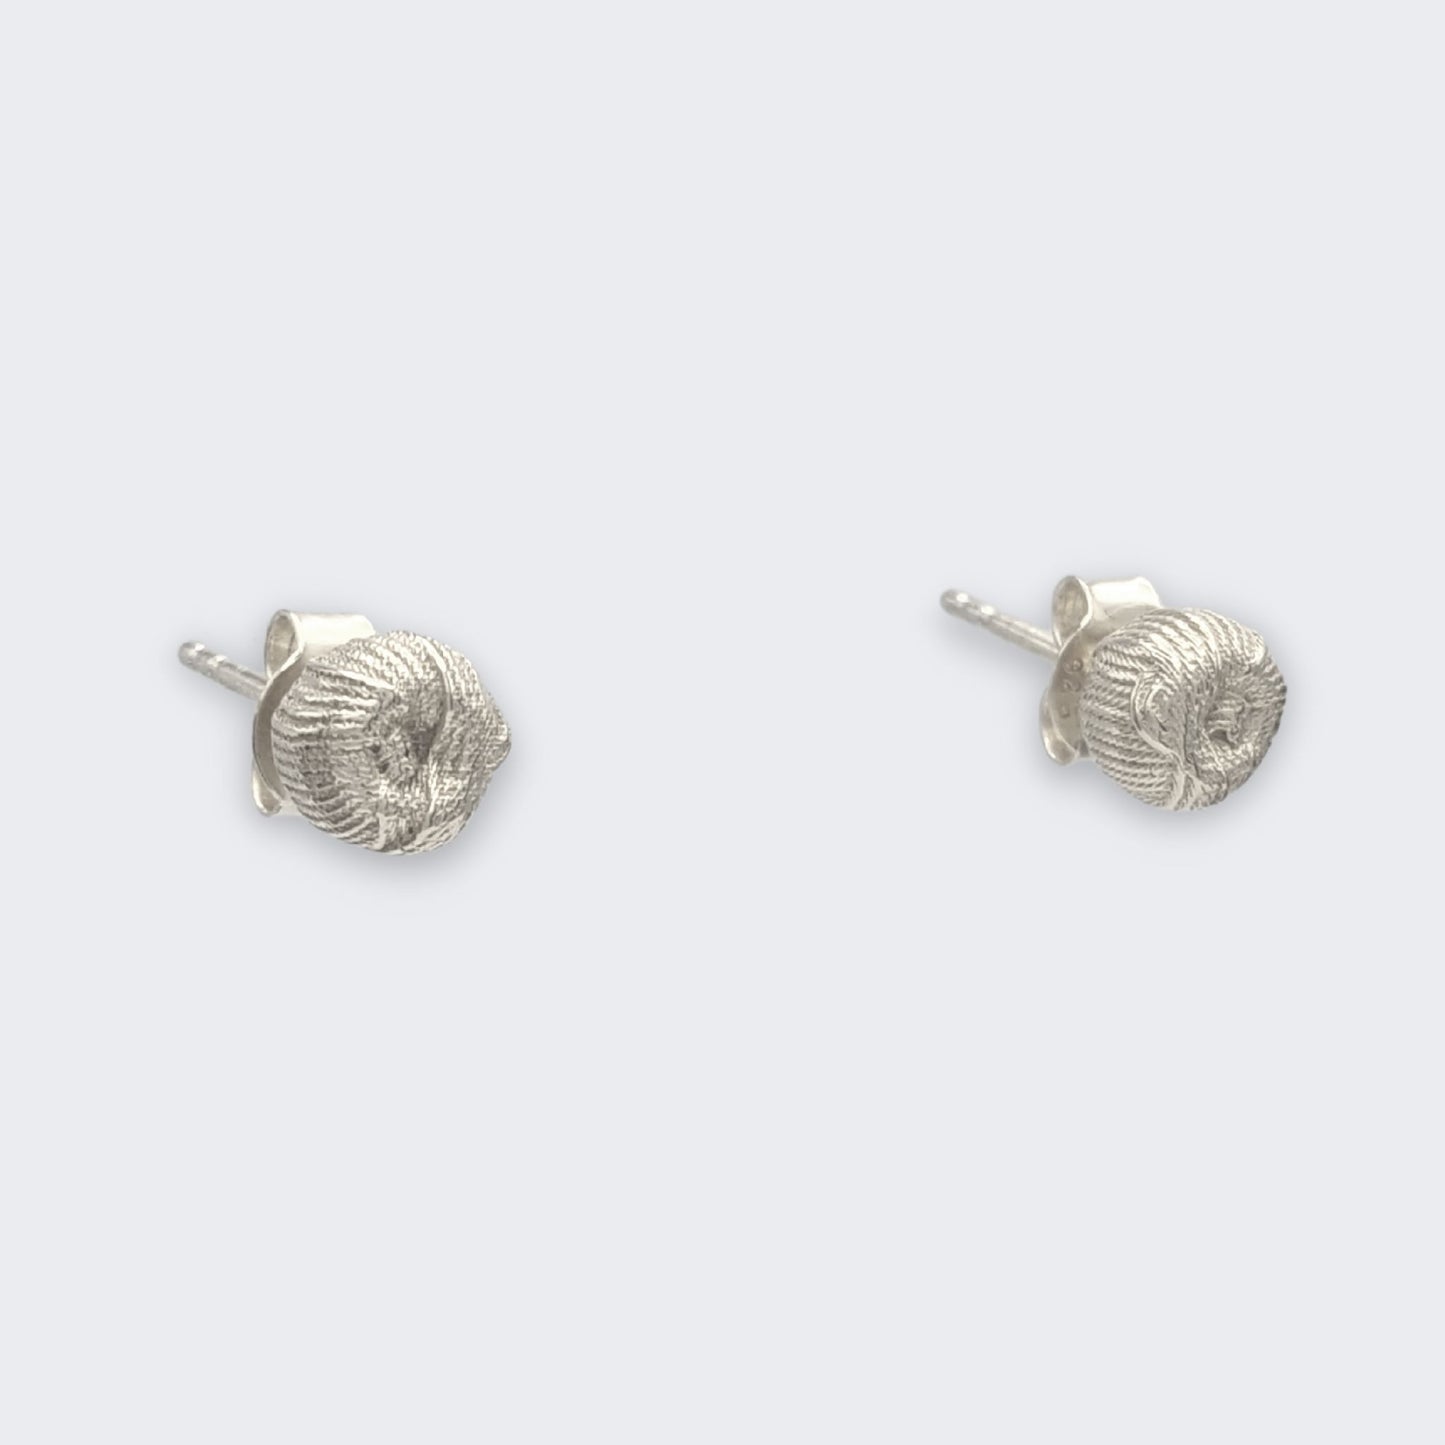 ren yarn stud earring in sterling silver pair (right side view)